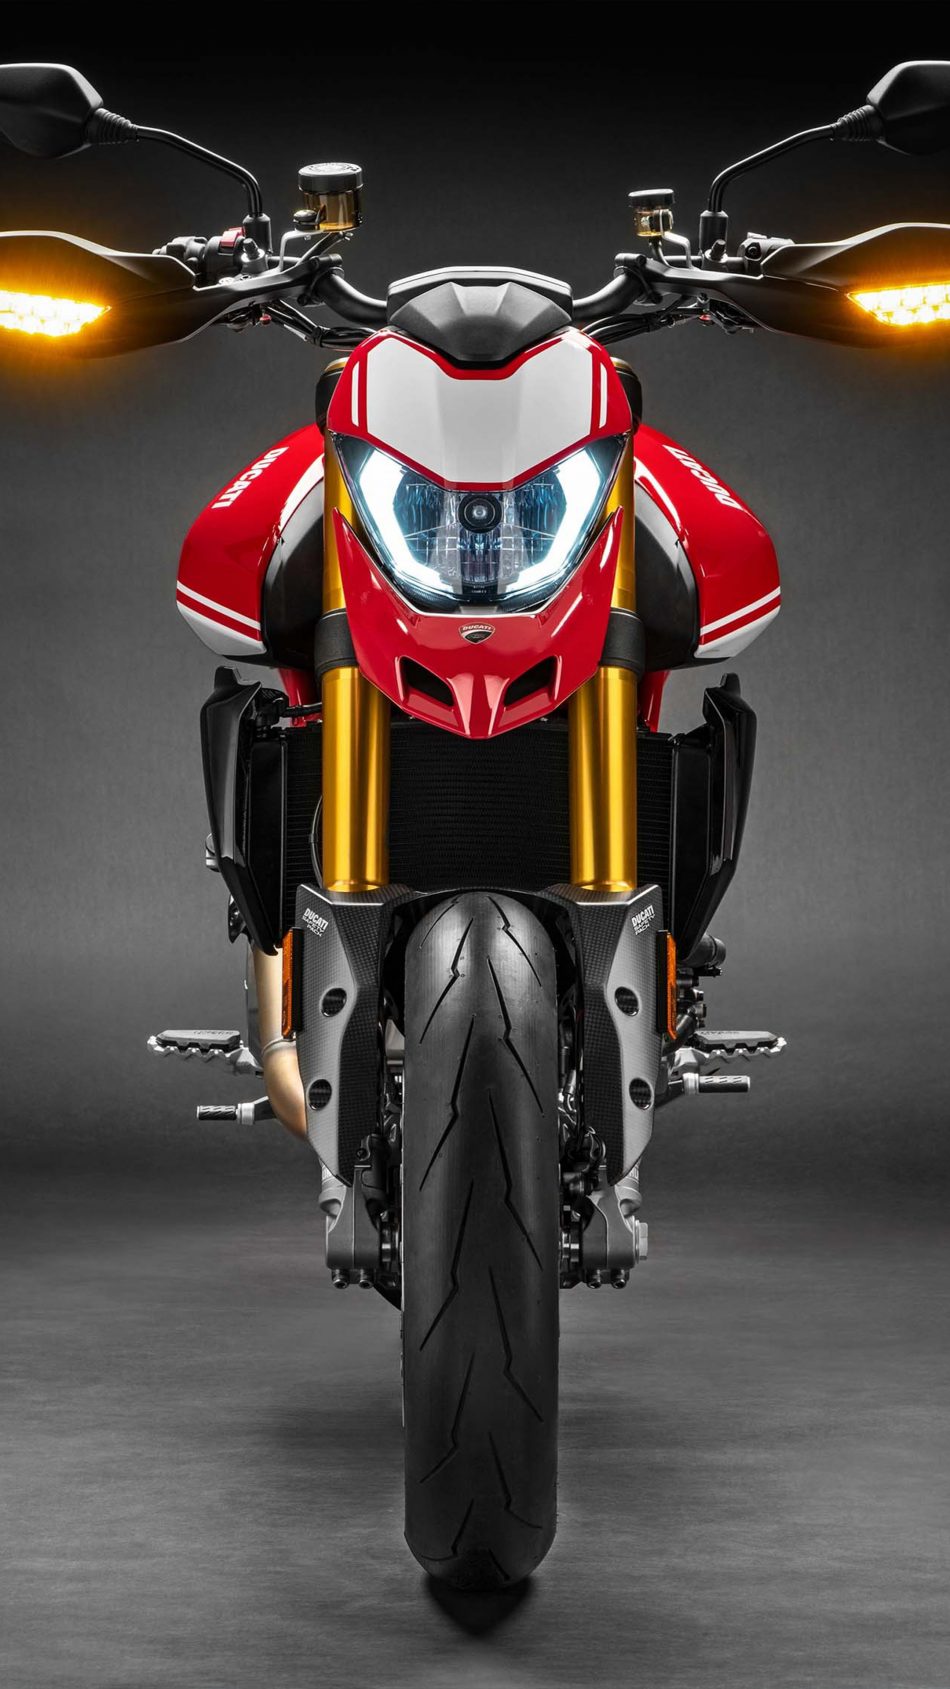 Ducati Panigale V4 Red in Runway 4K wallpaper download